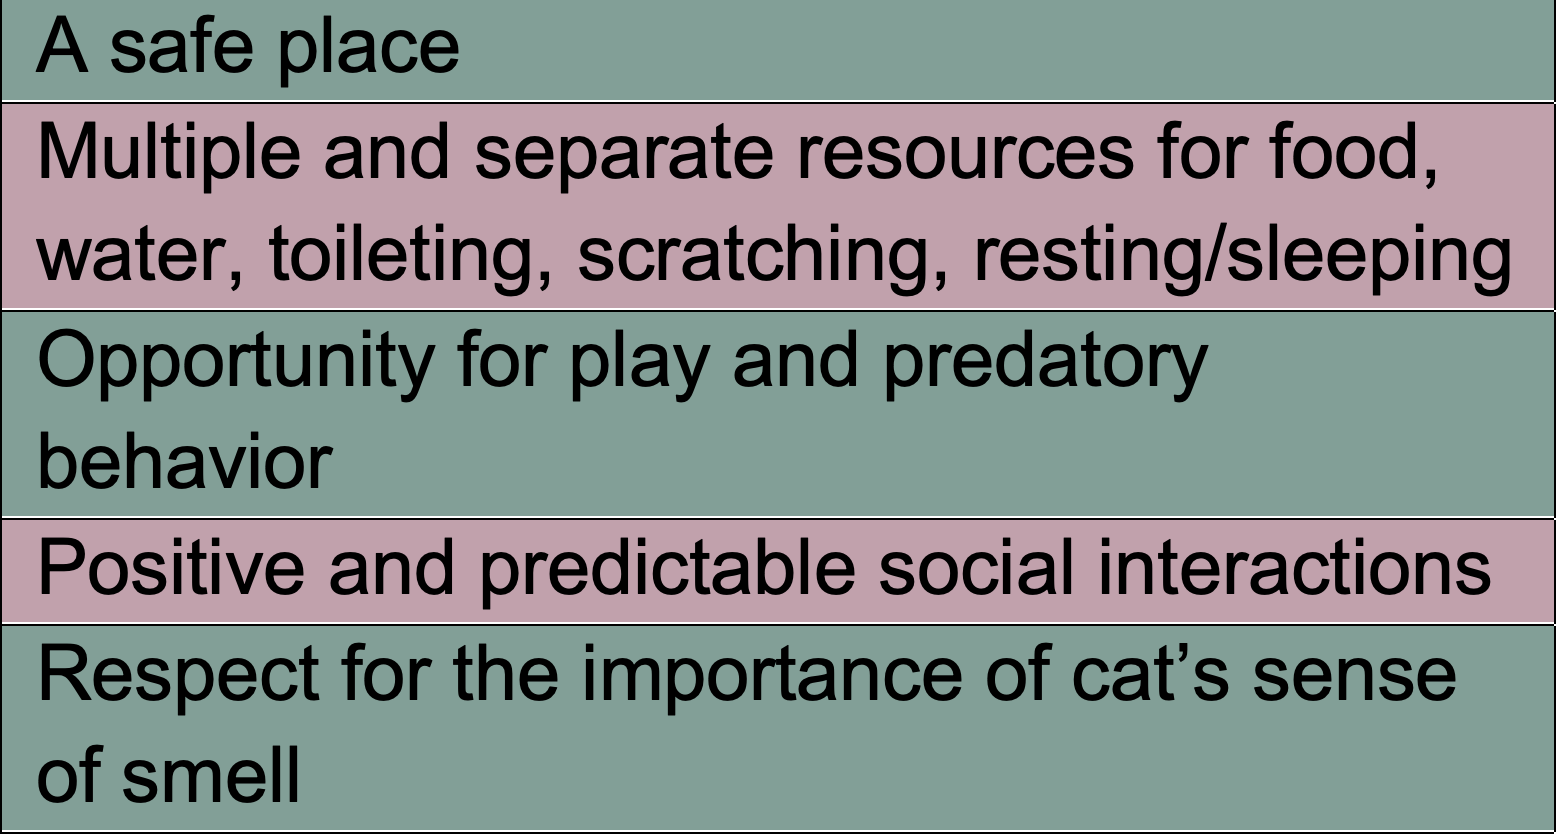 Table 2. The 5 pillars of a healthy feline environment